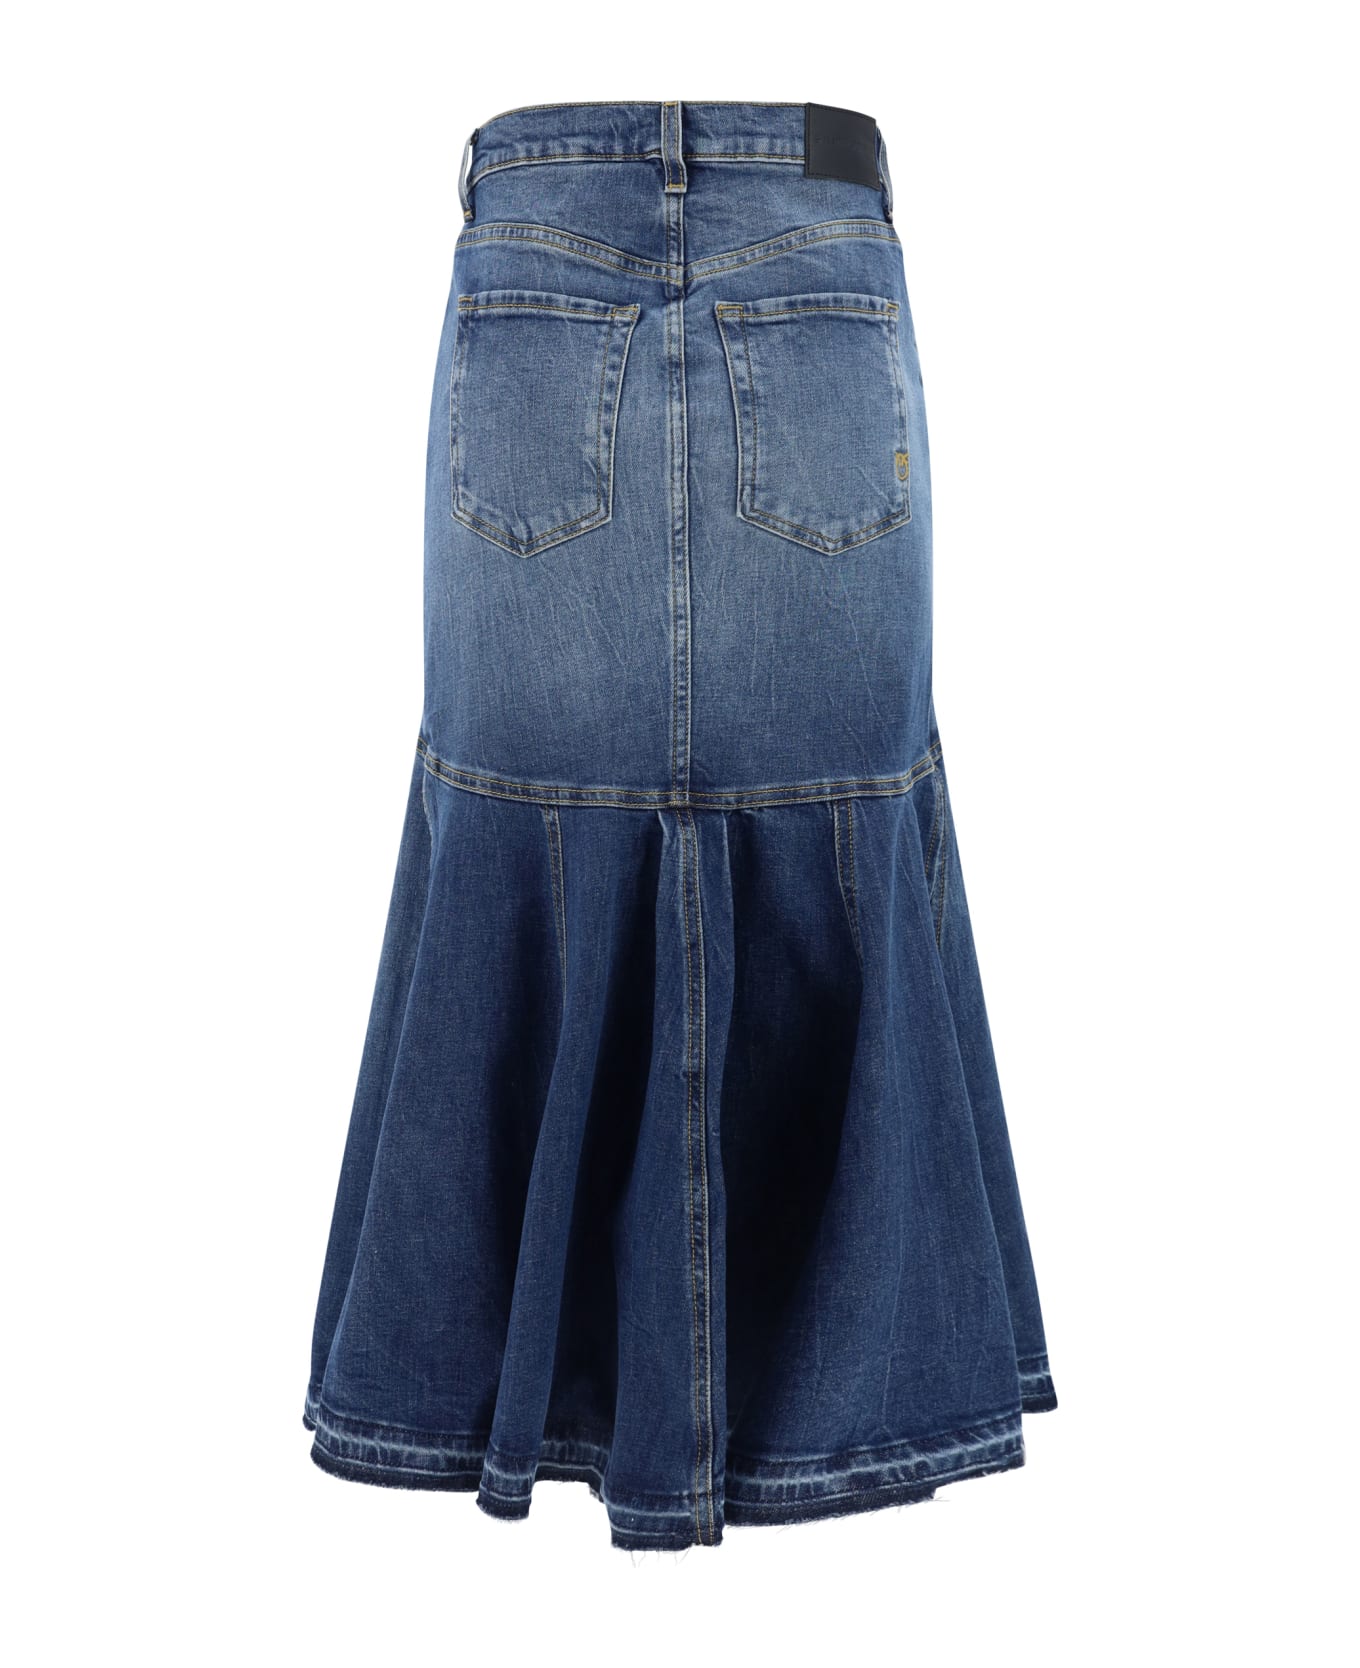 Pinko Ghirla Denim Skirt - Lavaggio Vintage Medio Scuro スカート